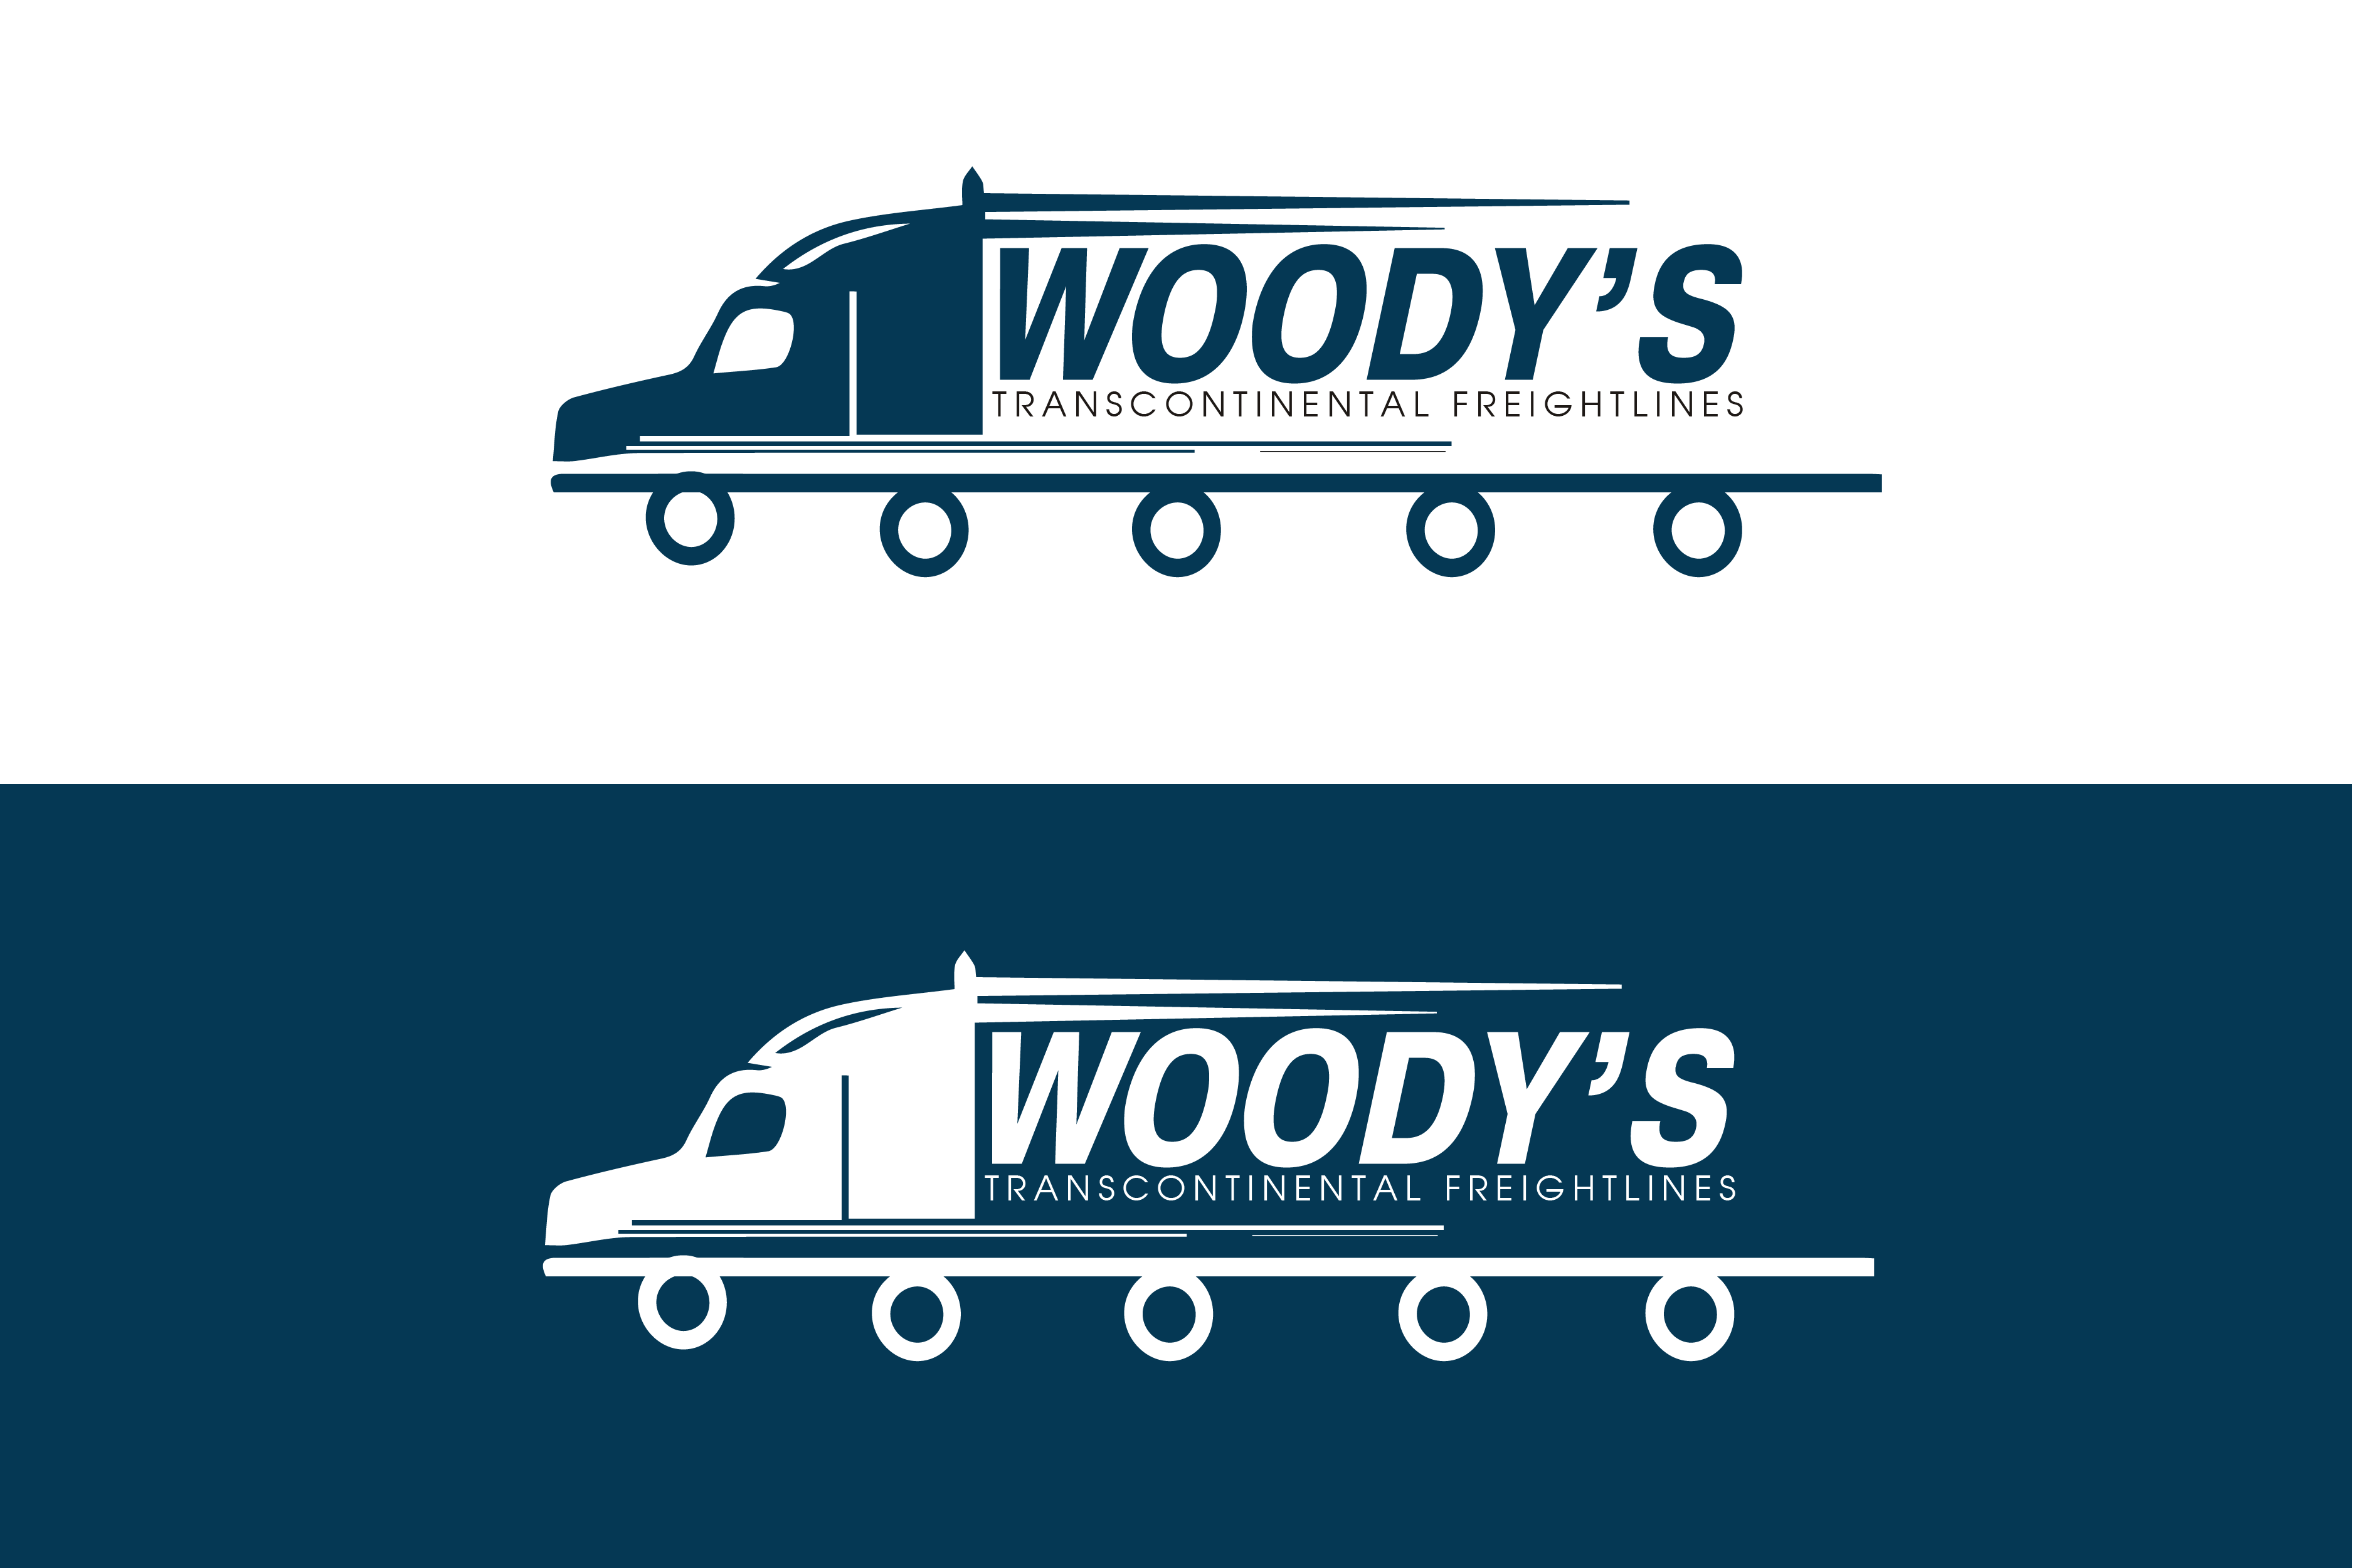 truck logo design eyes